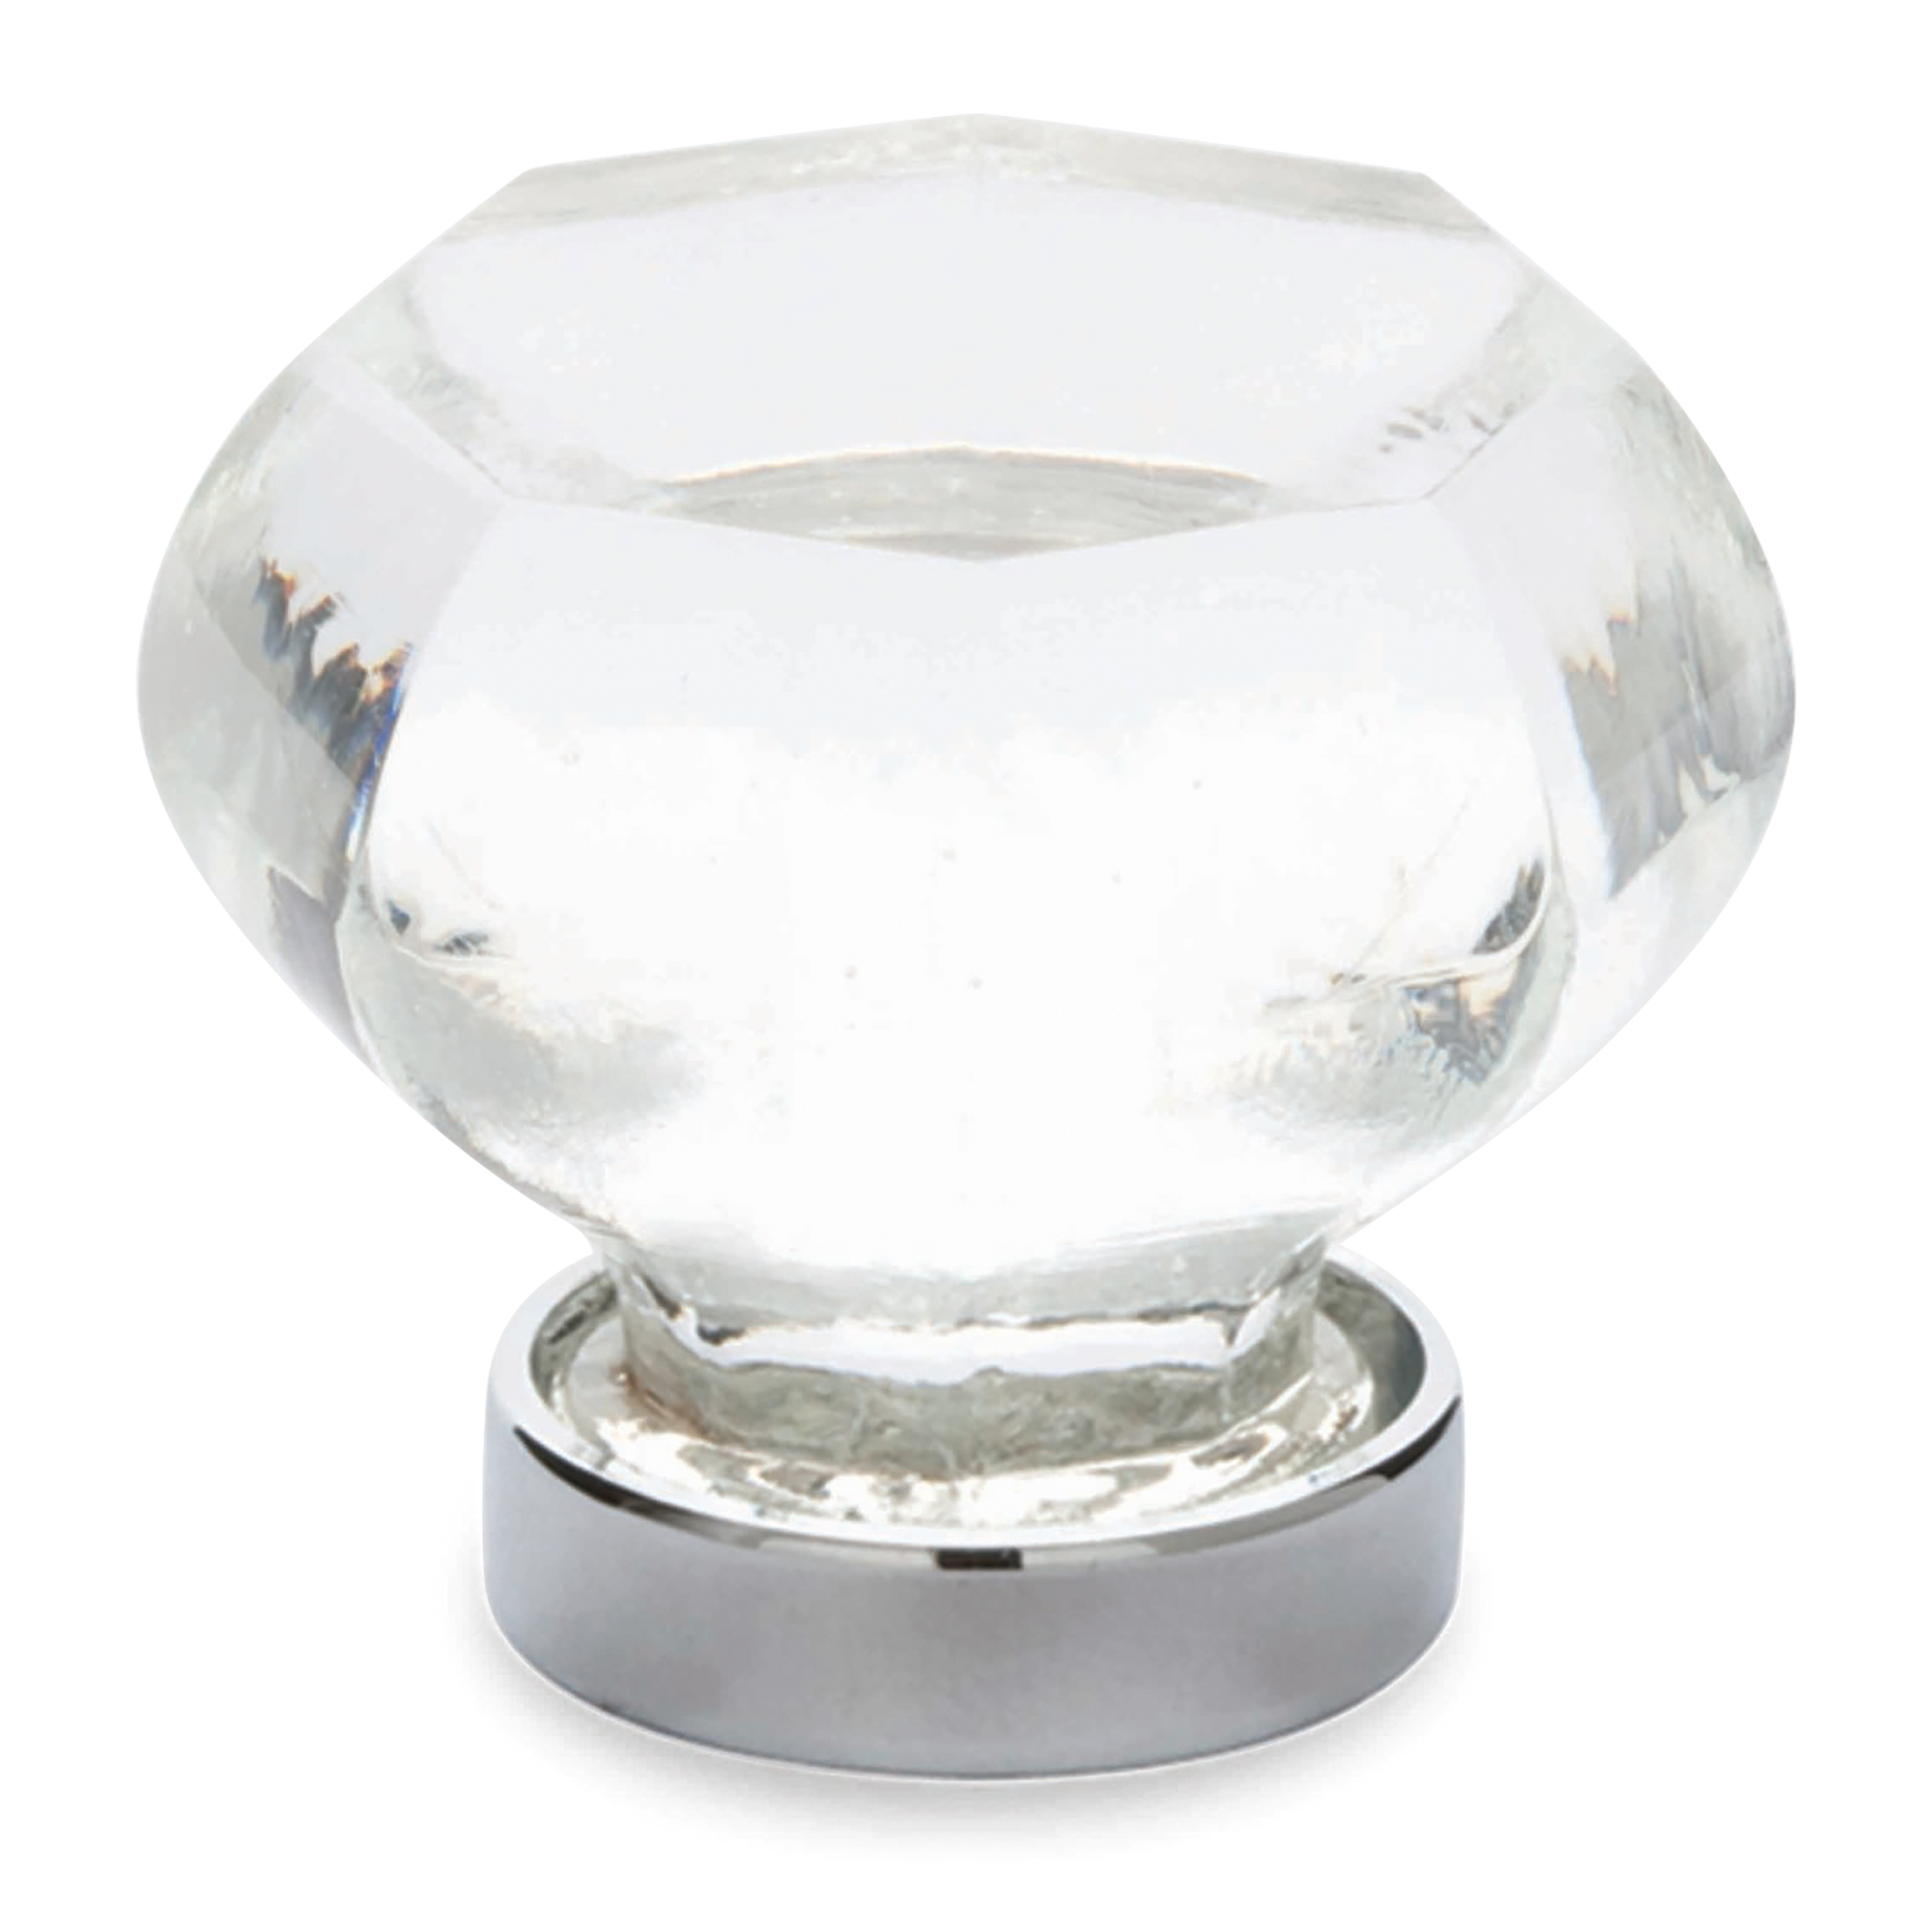 A feminine and traditional diamond shape glass knob.